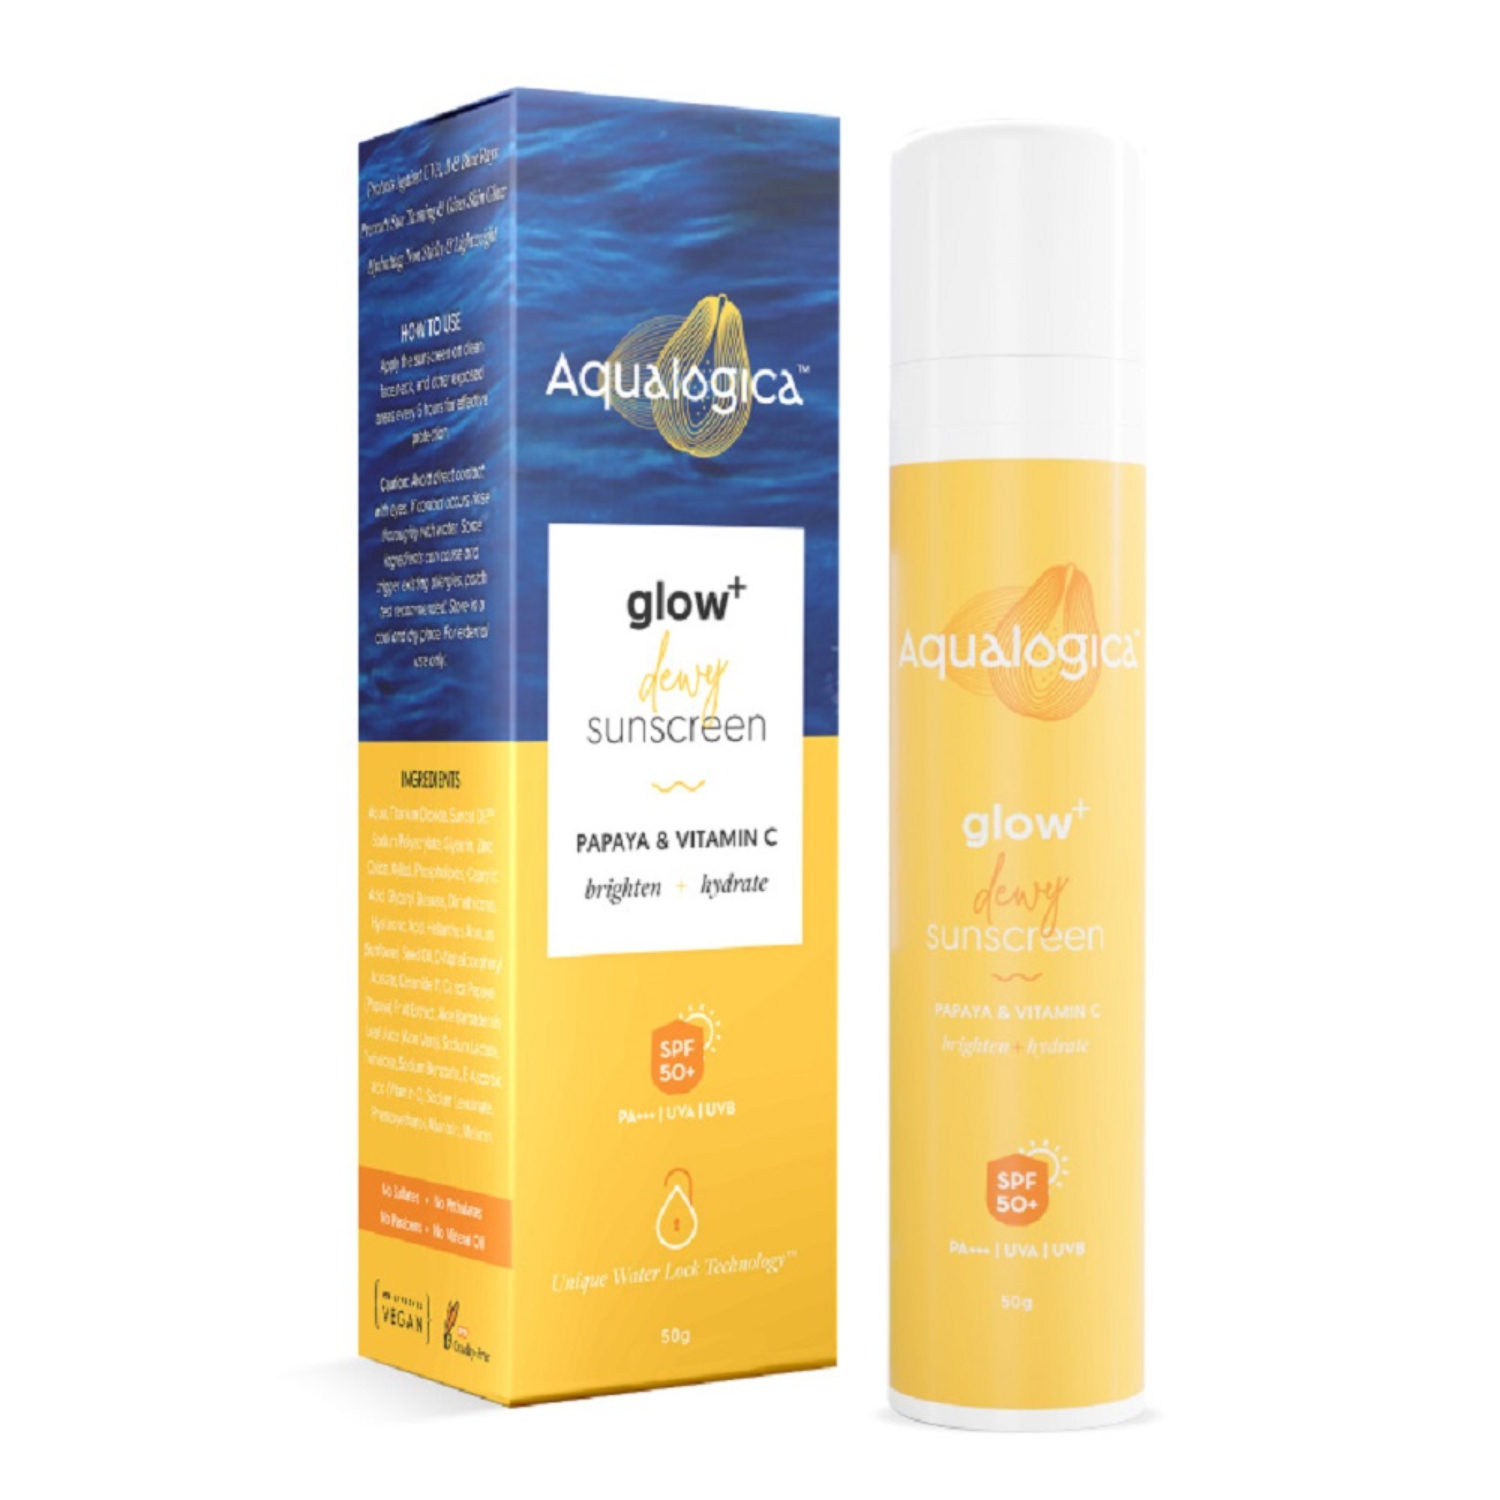 Aqualogica | Aqualogica Glow+ Dewy Sunscreen (50g)